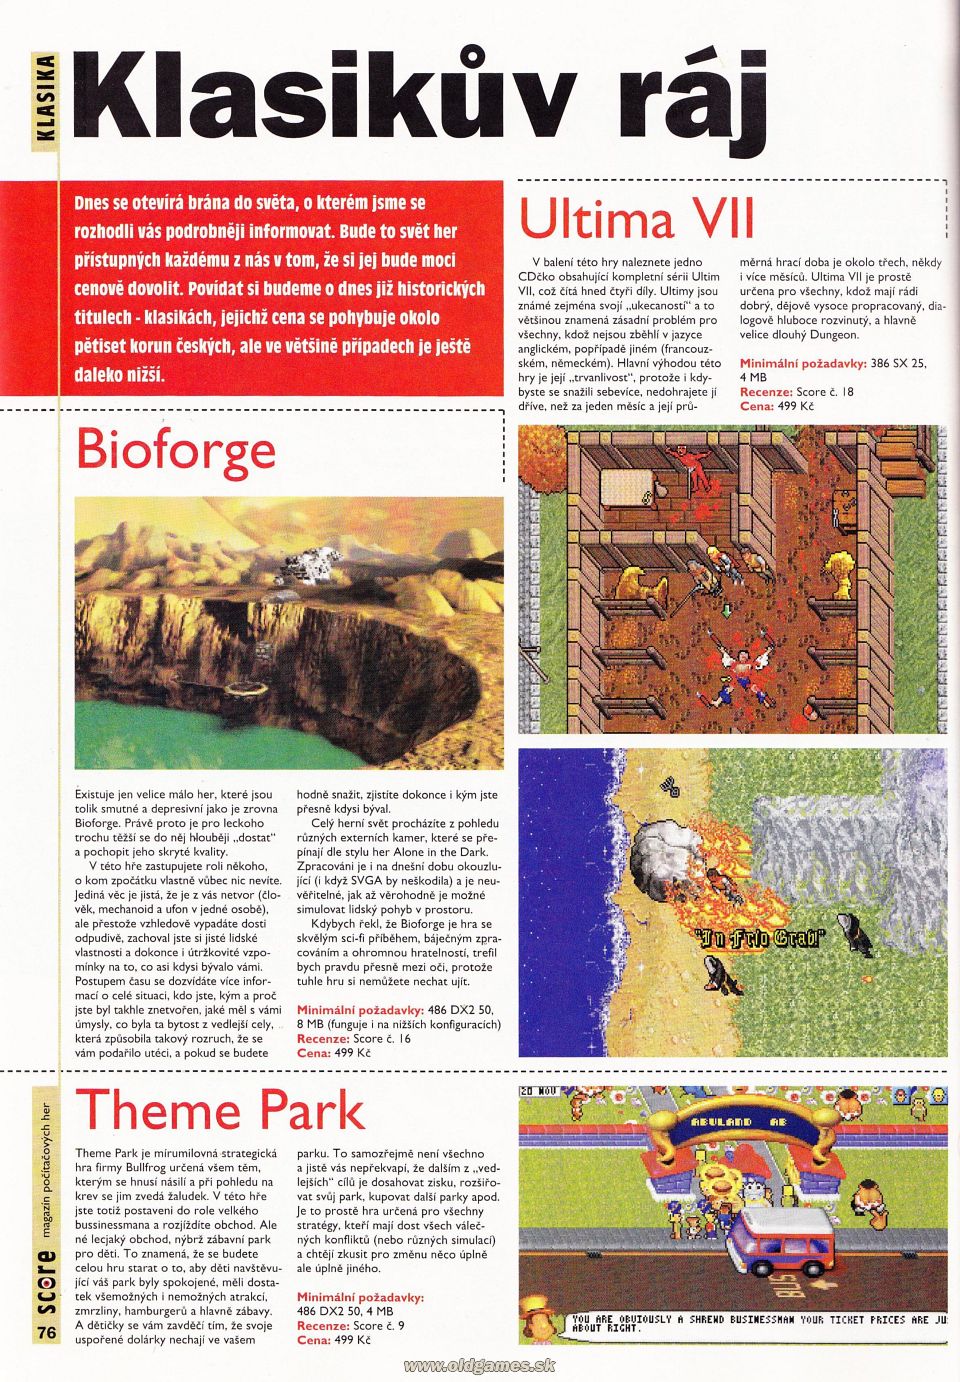 Klasika: Ultima VII, Bioforge, Theme Park